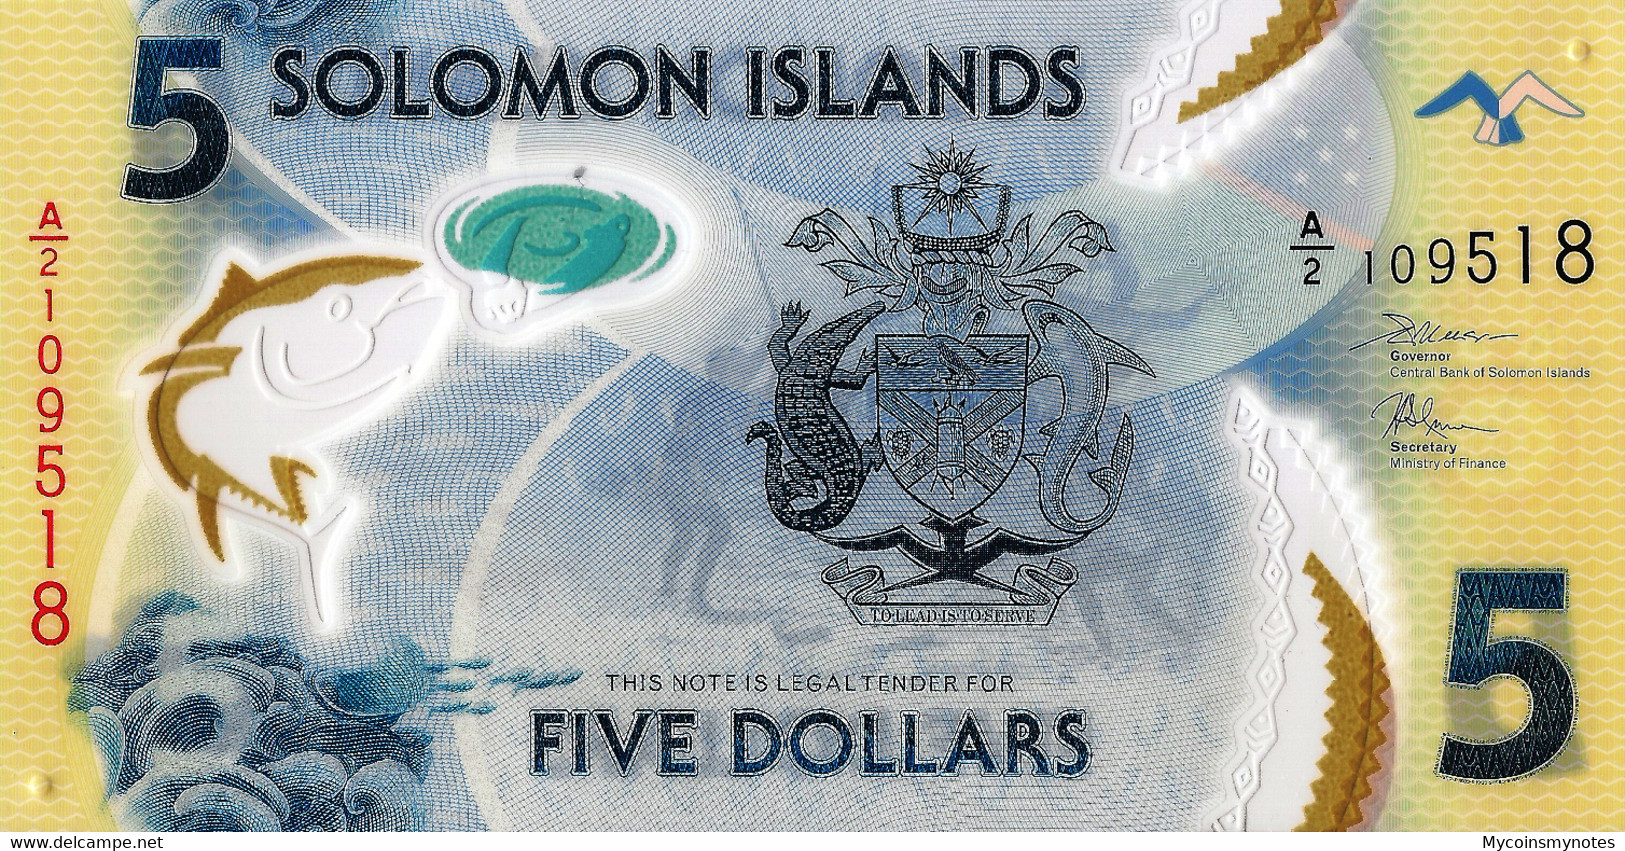 SOLOMON ISLAND, 5 DOLLAR, 2019, P-NEW, Polymer, UNC - Solomon Islands